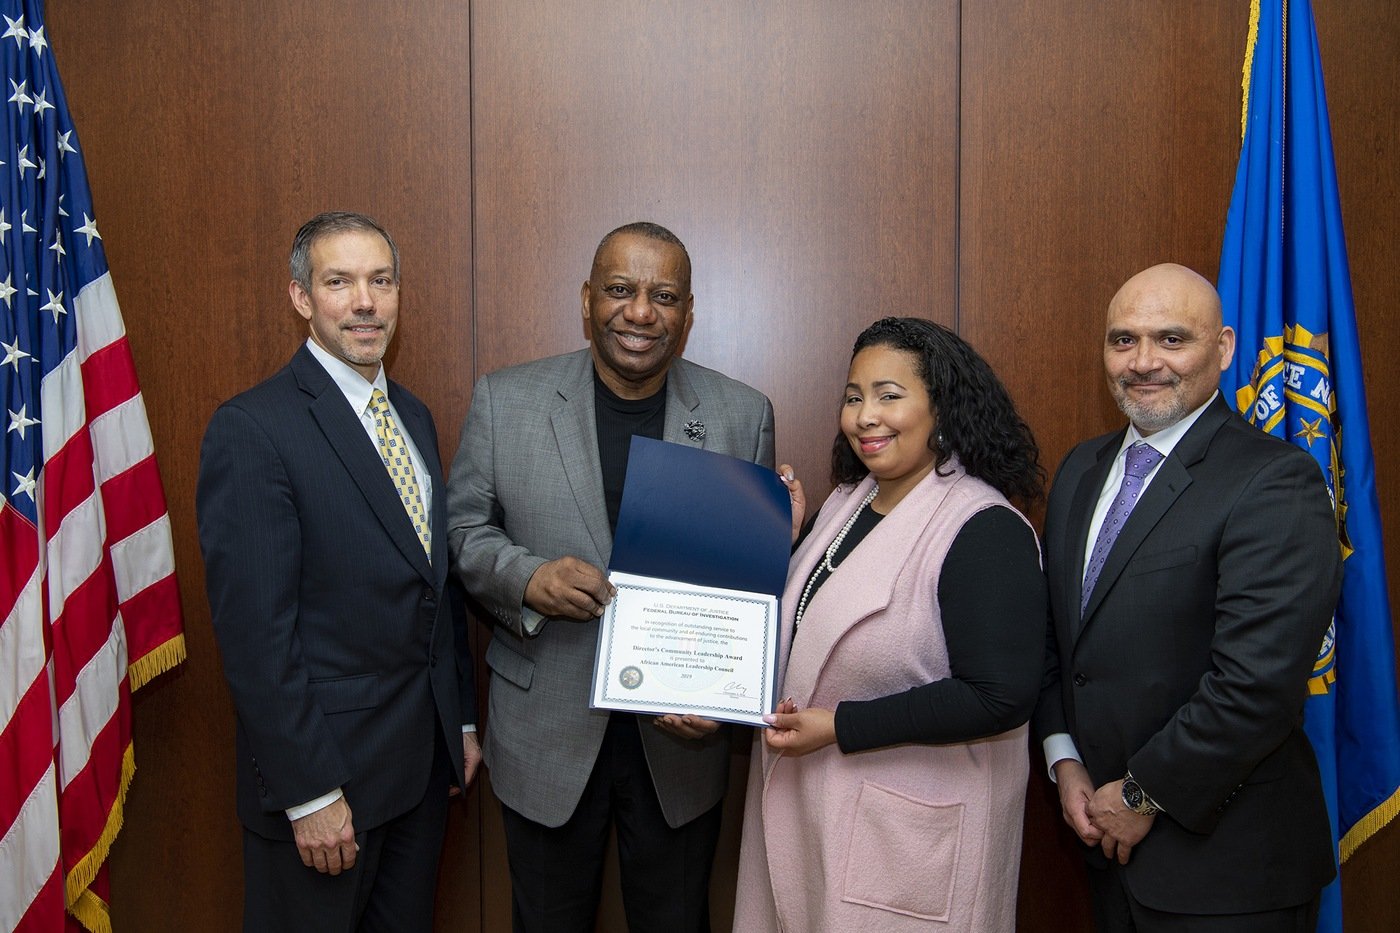 FBI Minneapolis 2019 Director’s Community Leadership Award recipient the African American Leadership Council.